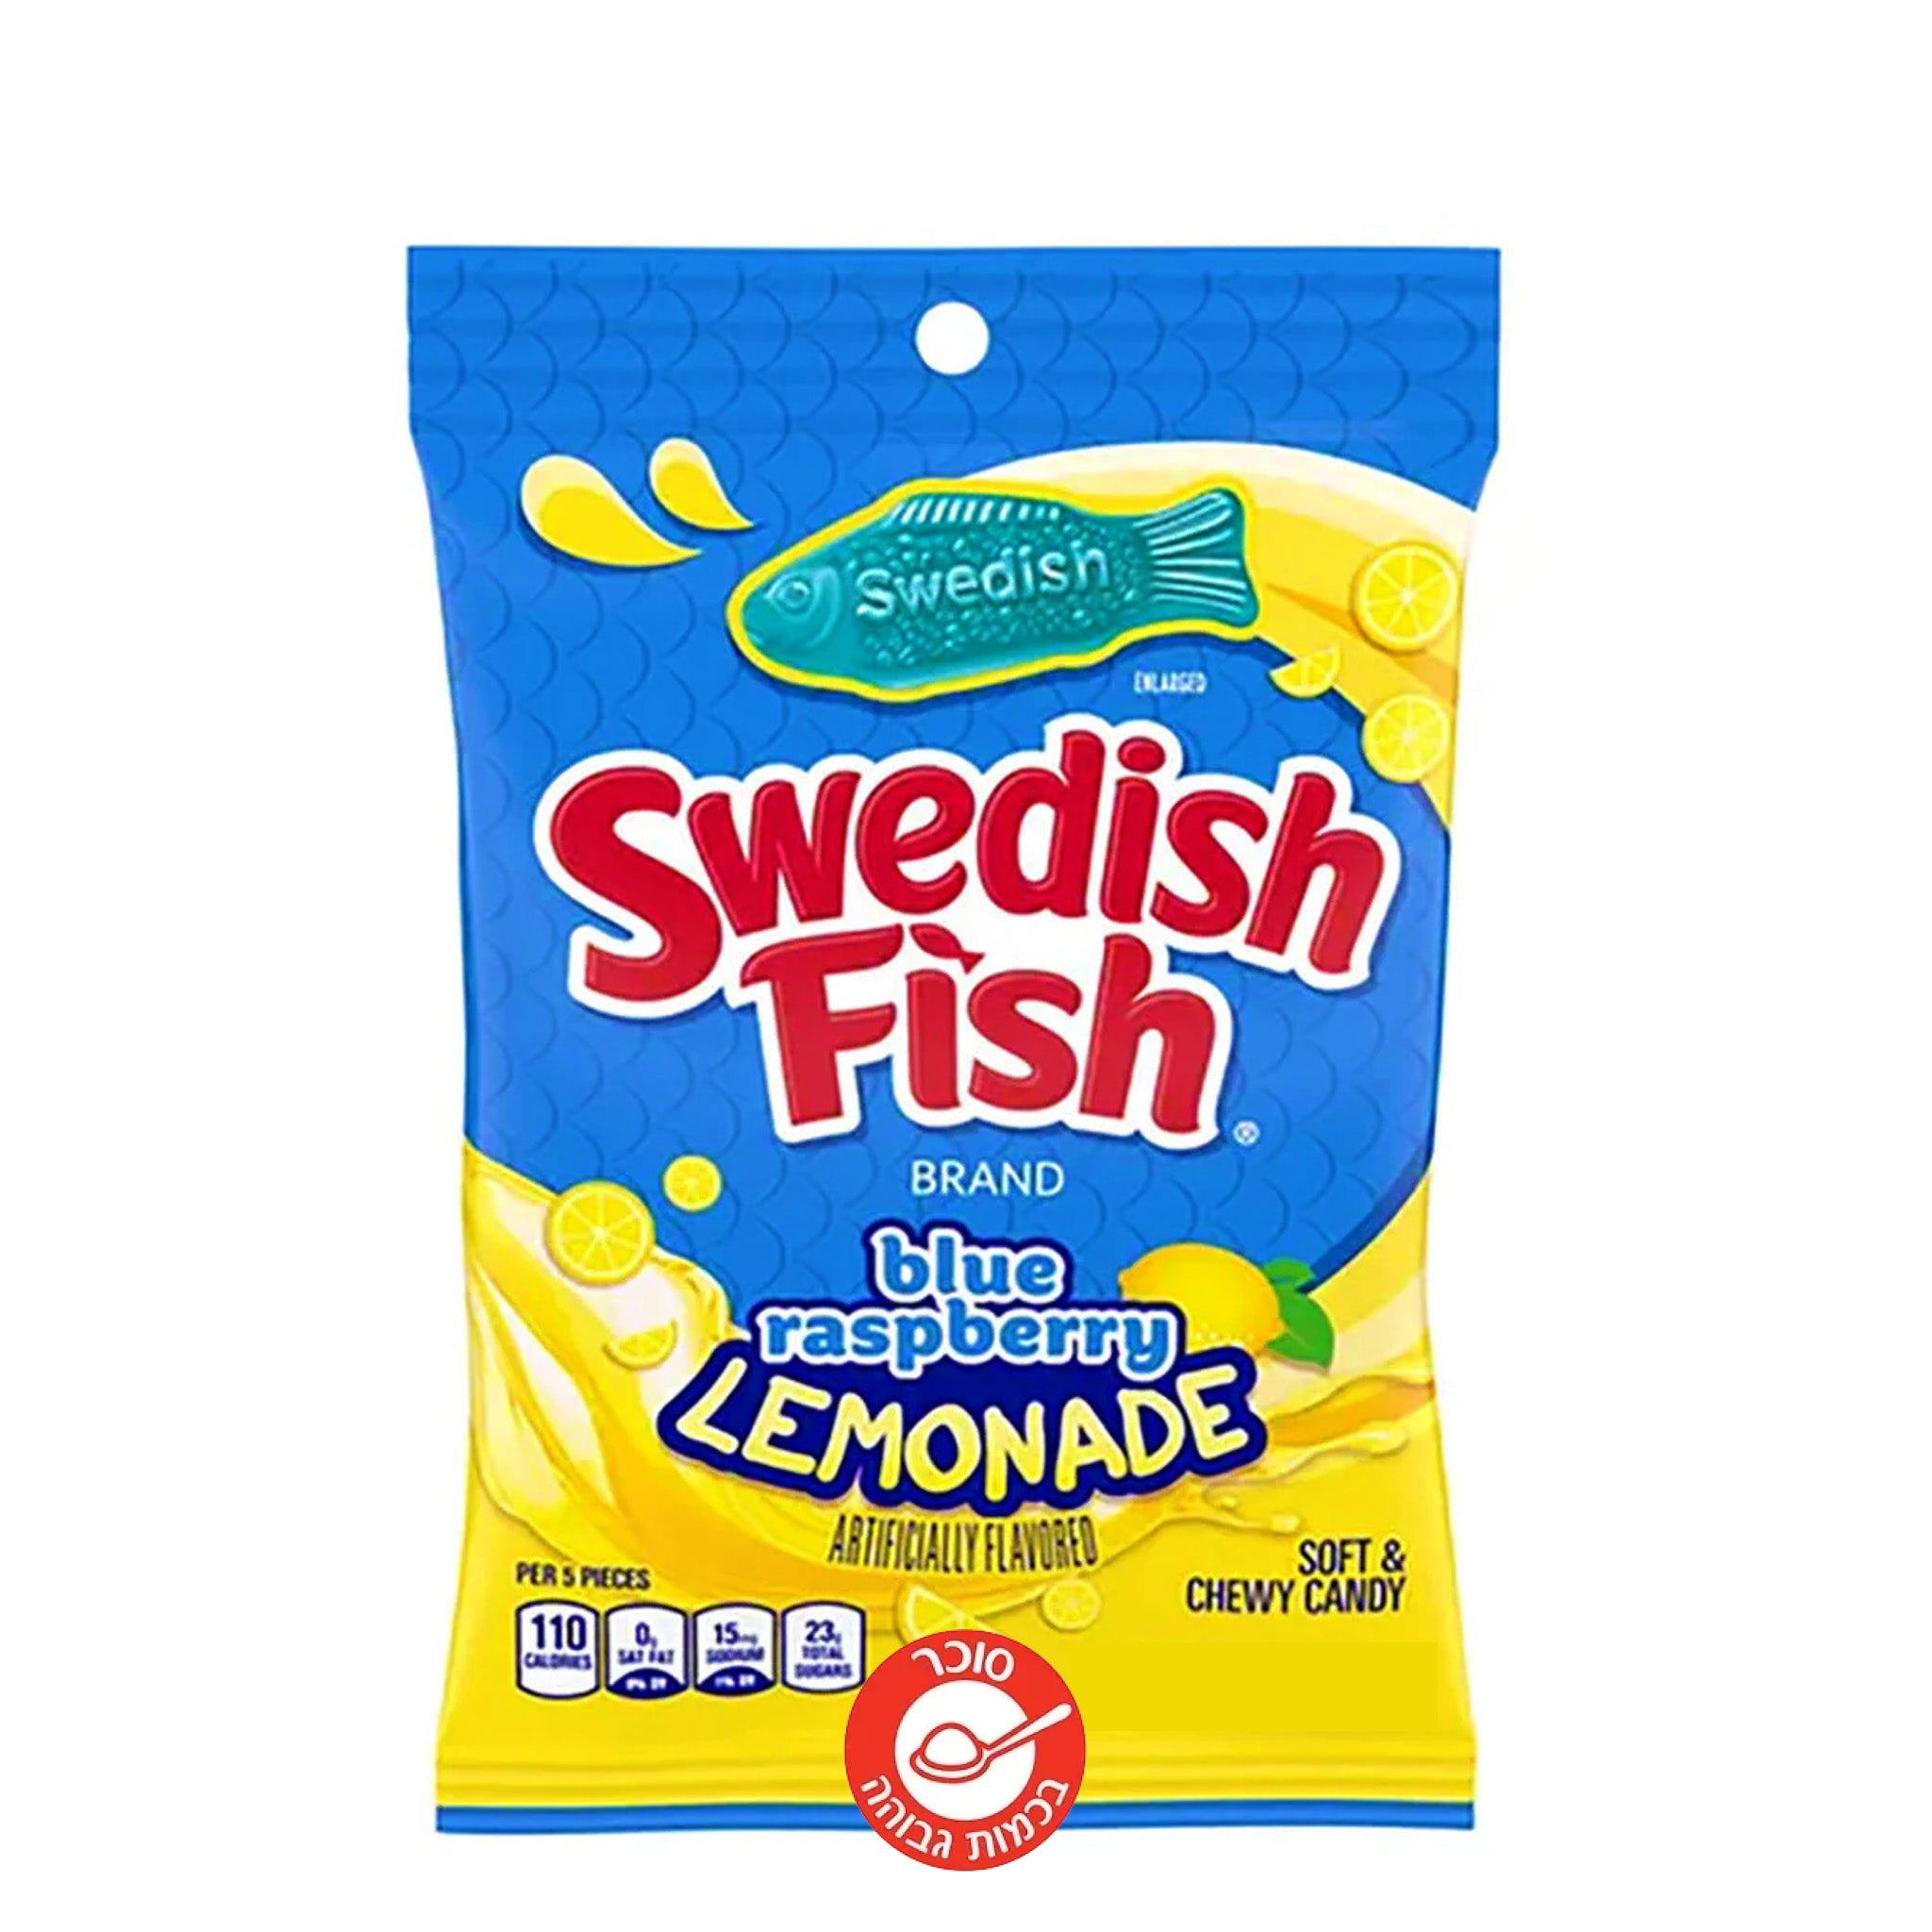 Swedish Fish Lemondae דגי גומי סווידש בטעם לימונדה